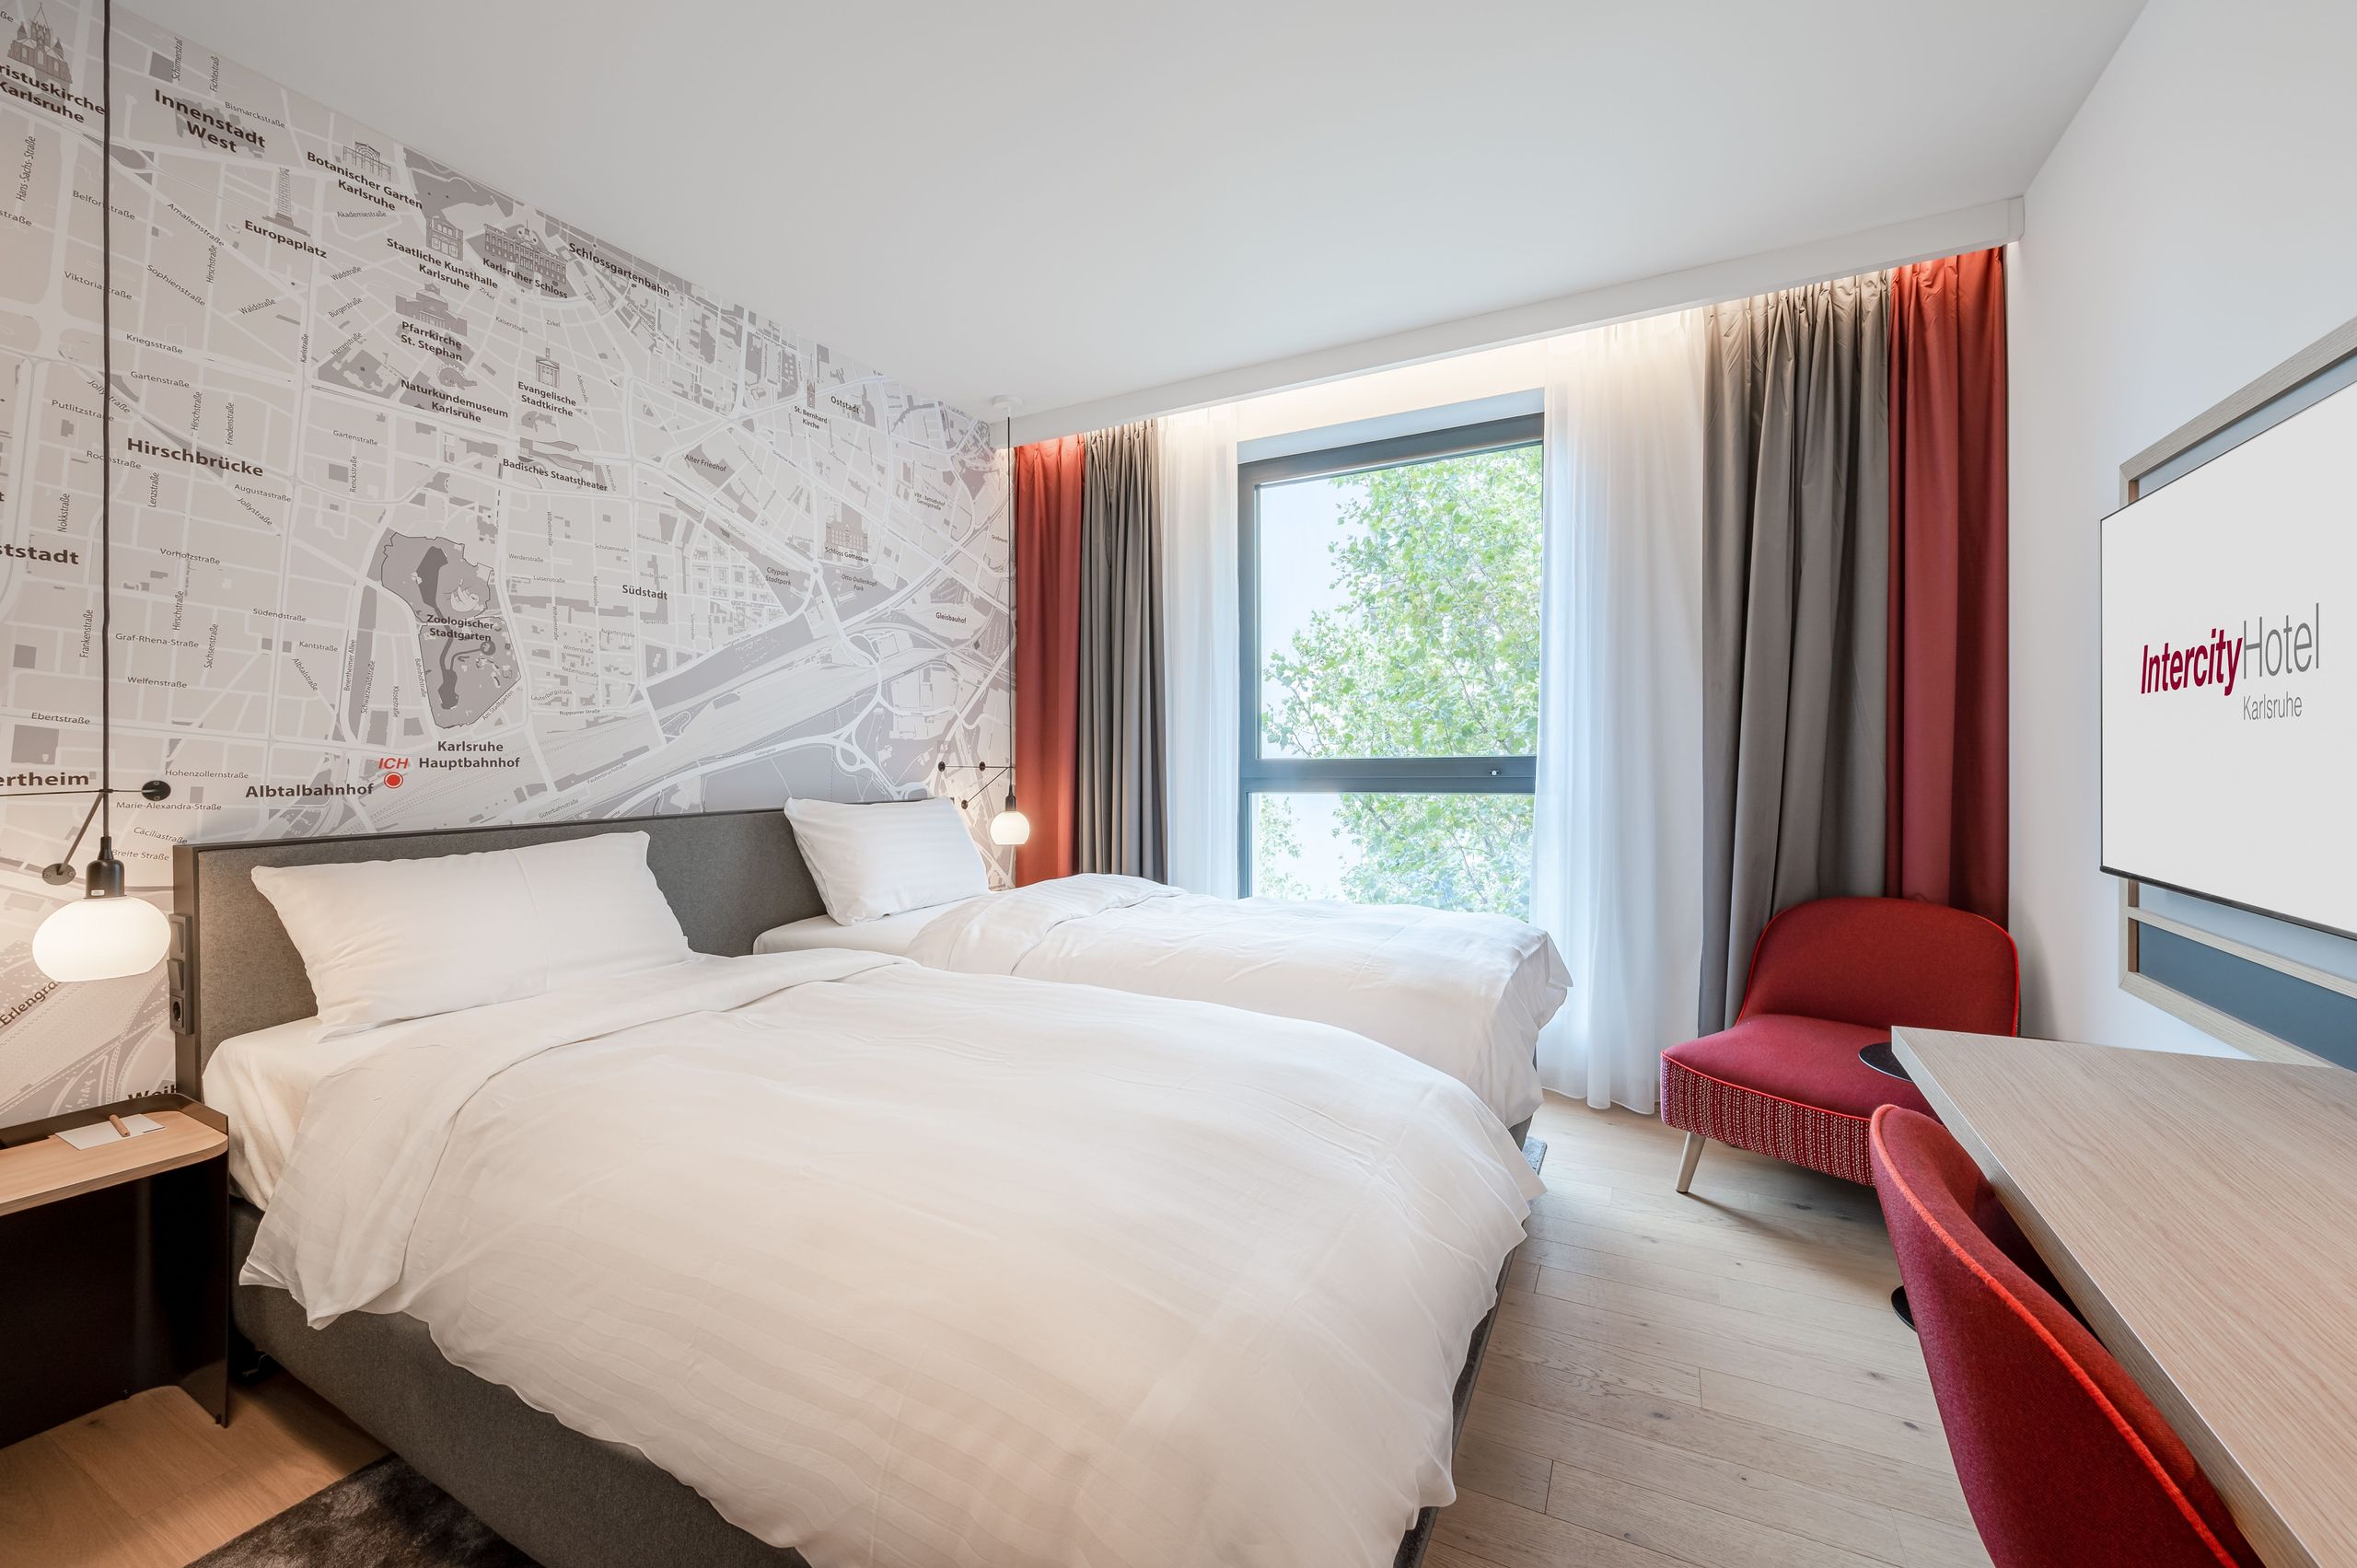 Business hotel in Karlsruhe - IntercityHotel Karlsruhe, Business Twin bed room